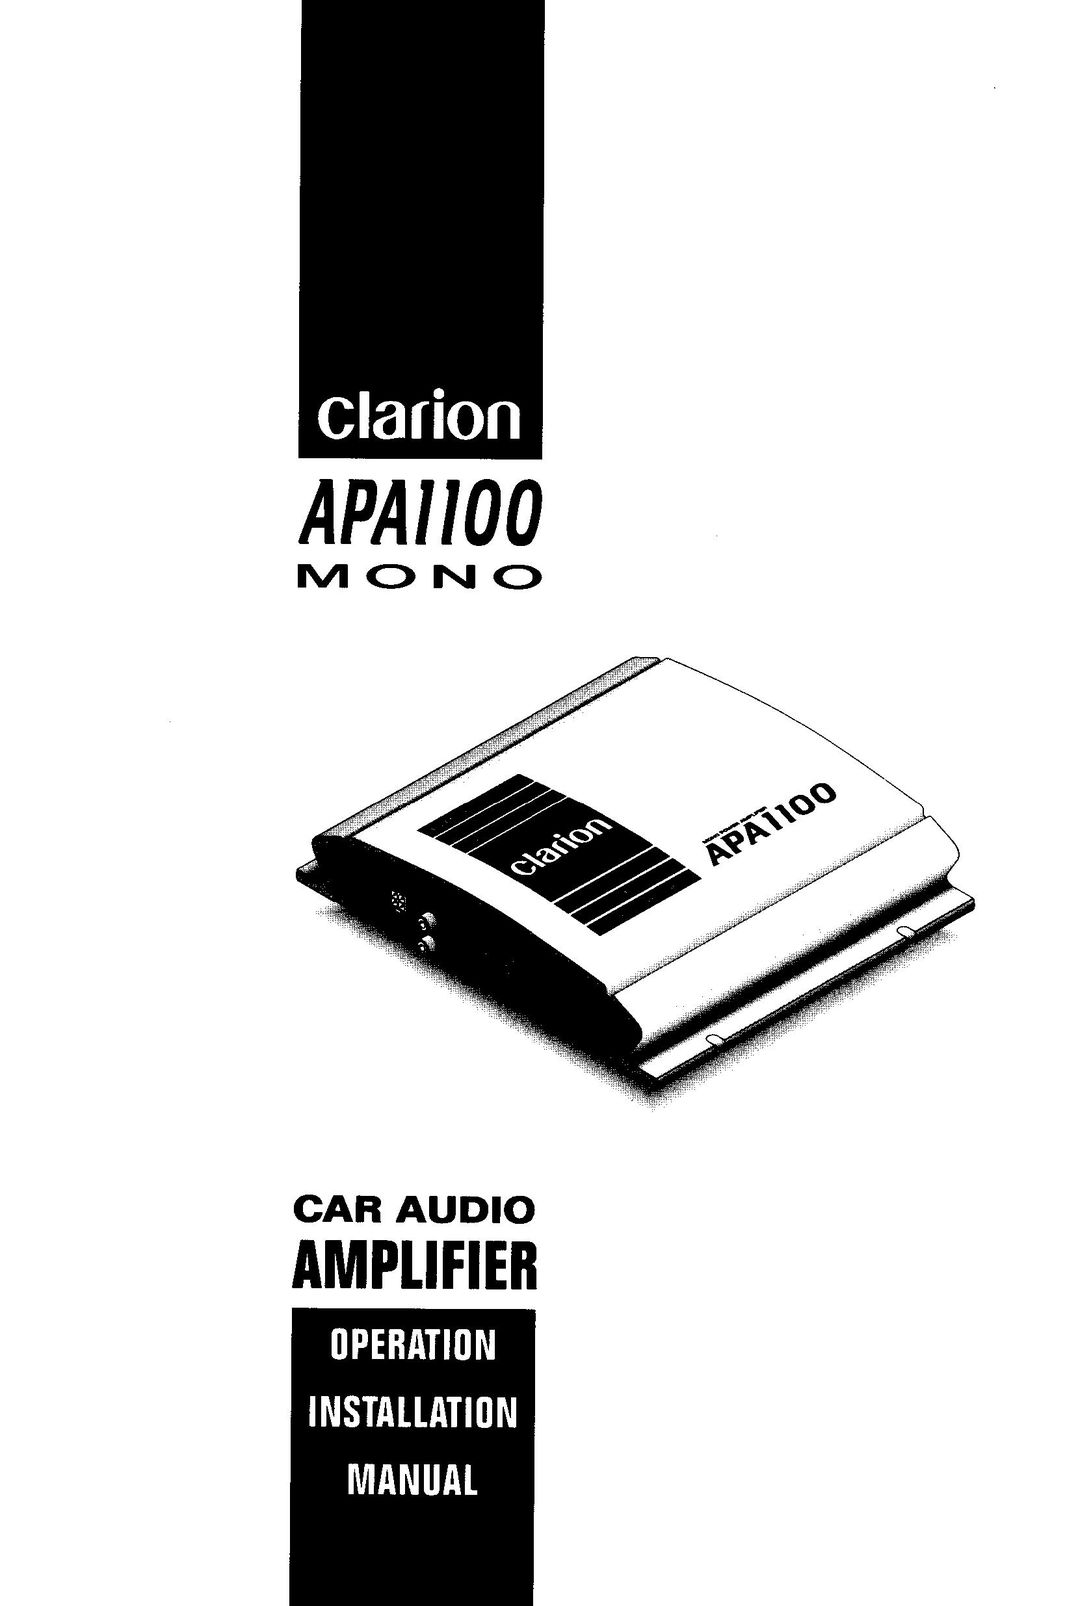 Clarion APA1100 Car Amplifier User Manual